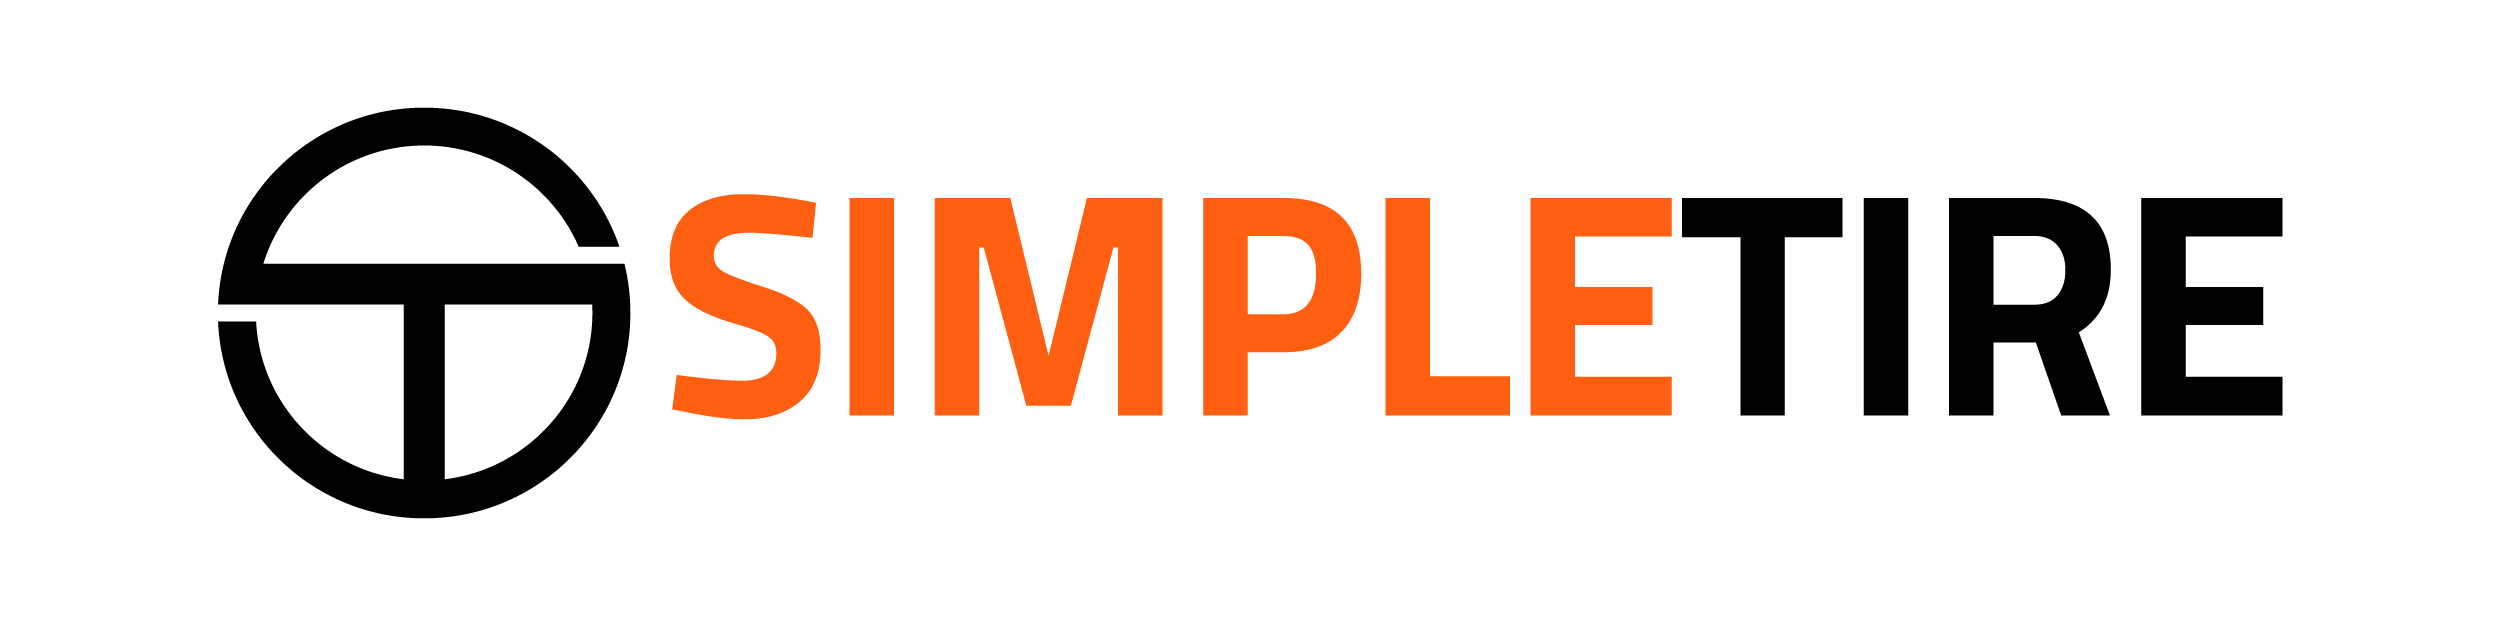 SimpleTire Company Logo